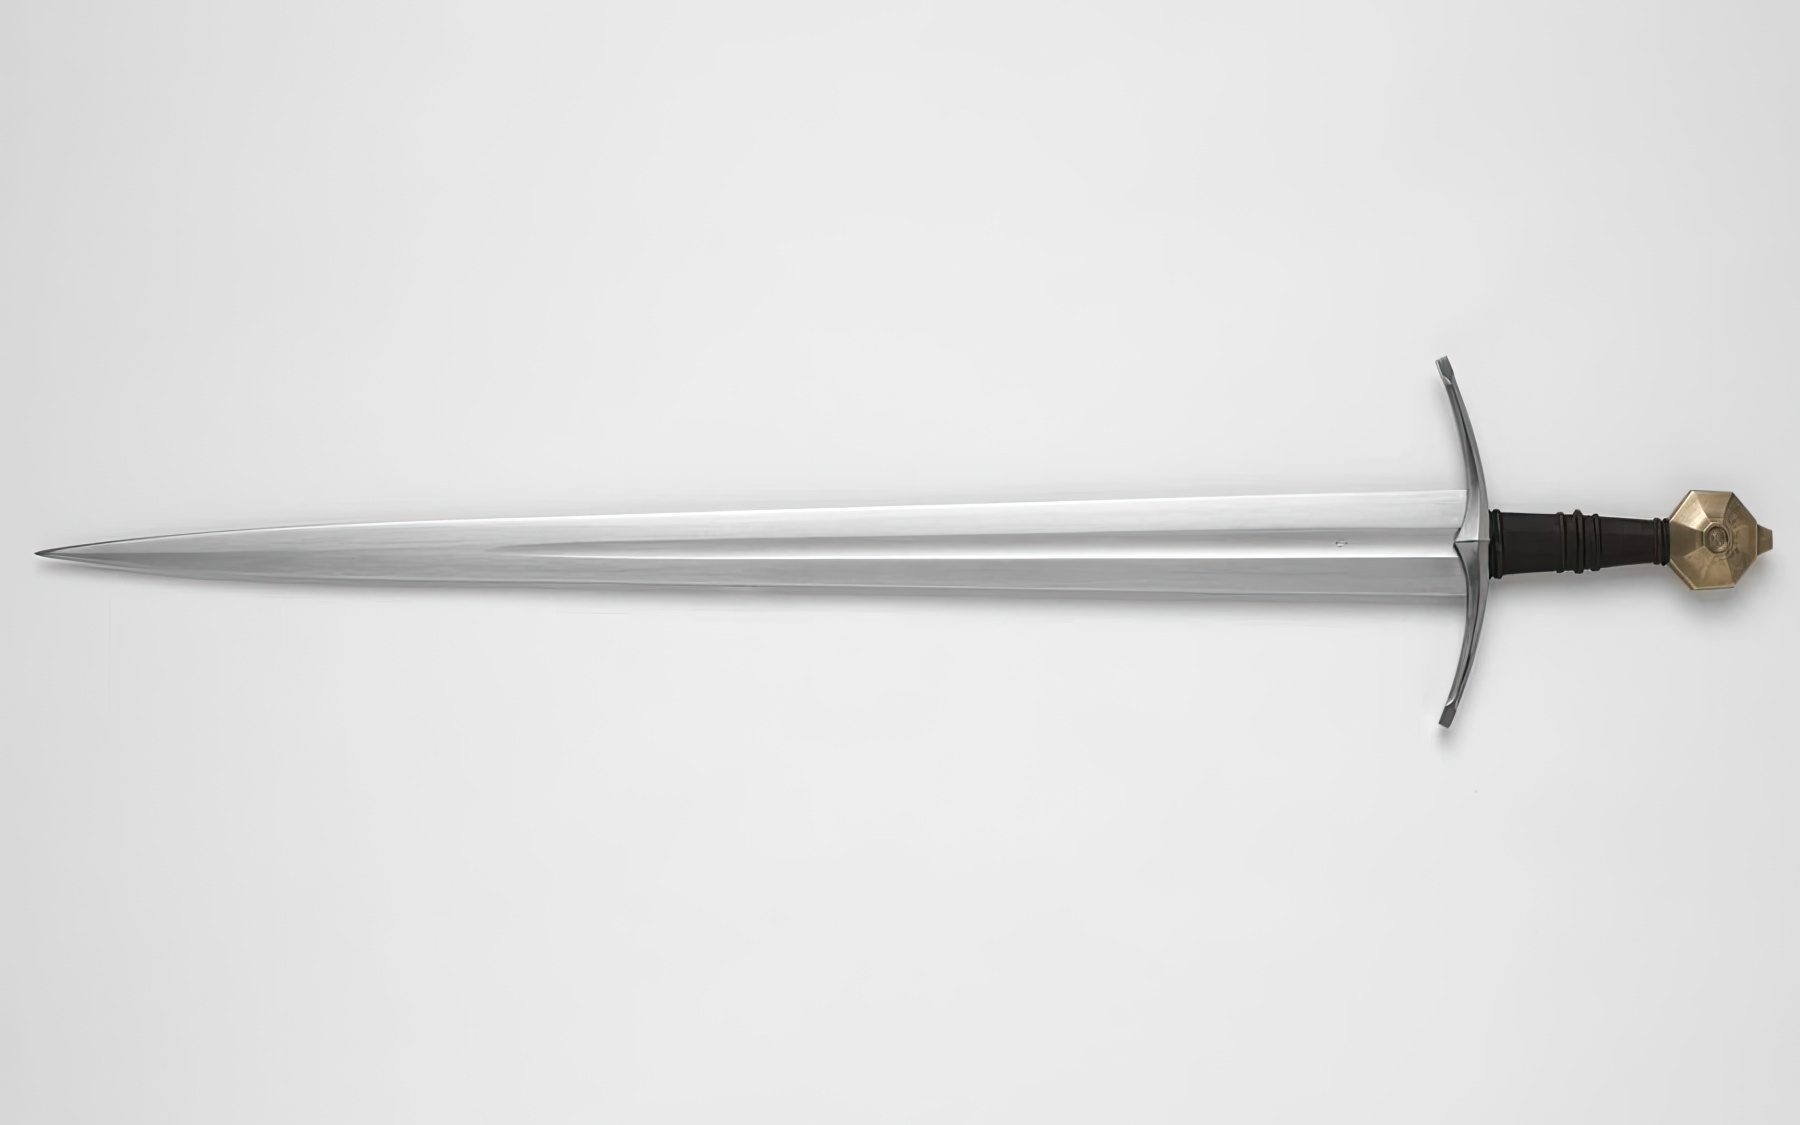 Oakeshott Type XVI: The 14th Century Anti-Armor Sword